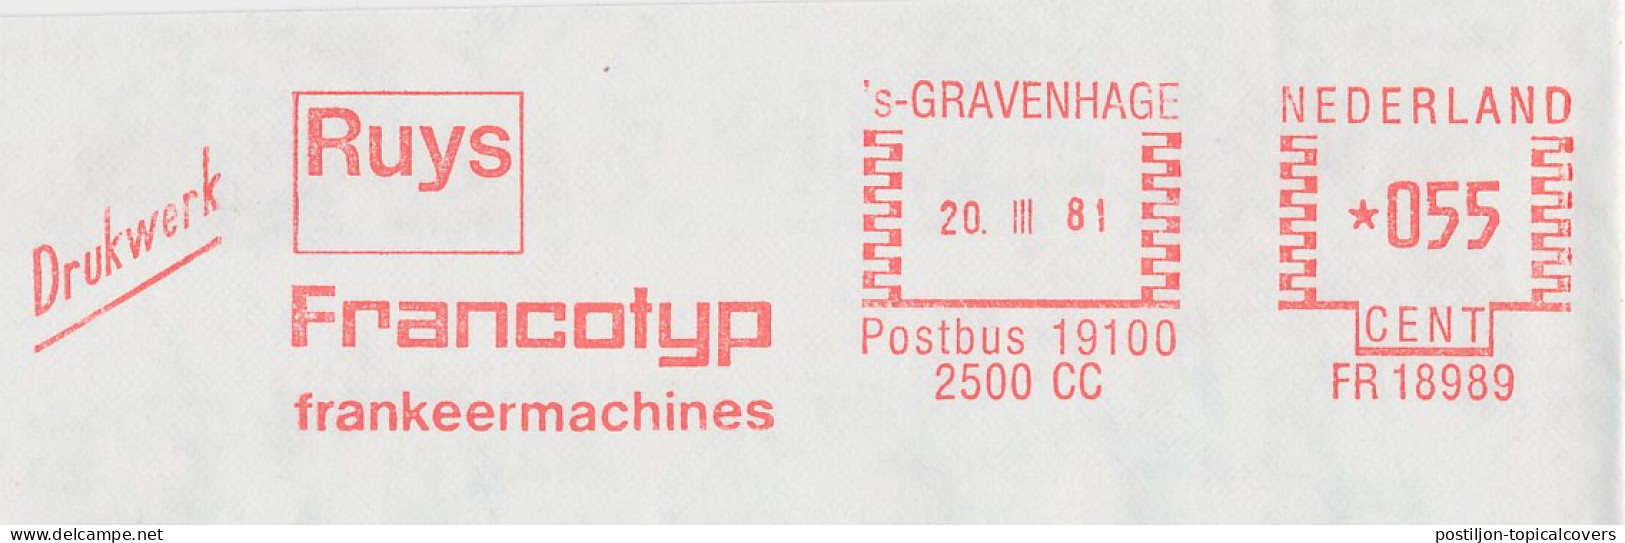 Meter Cover Netherlands 1981 Francotyp - The Hague - Viñetas De Franqueo [ATM]